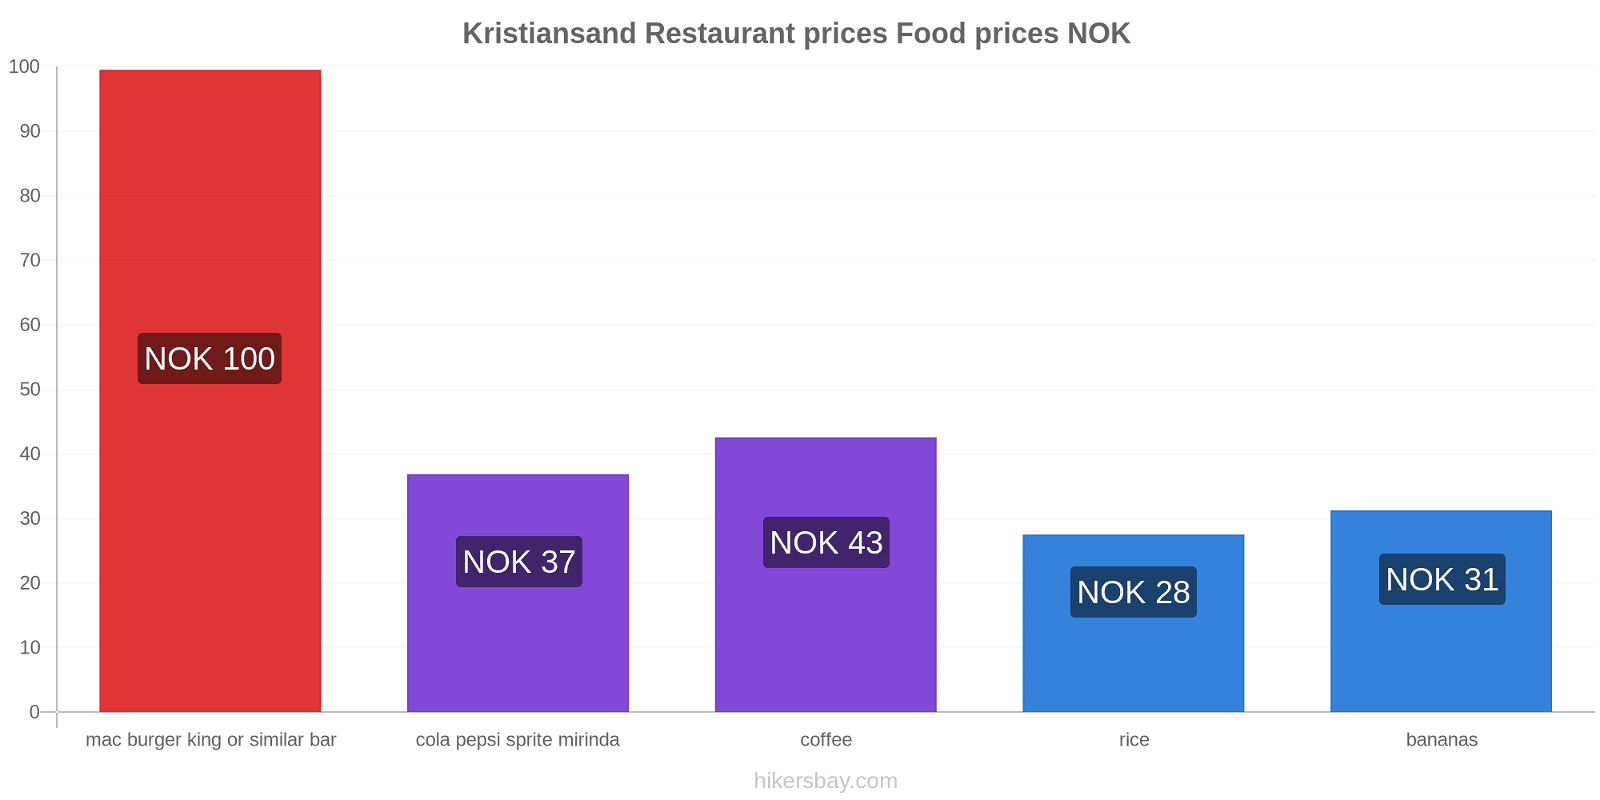 Kristiansand price changes hikersbay.com